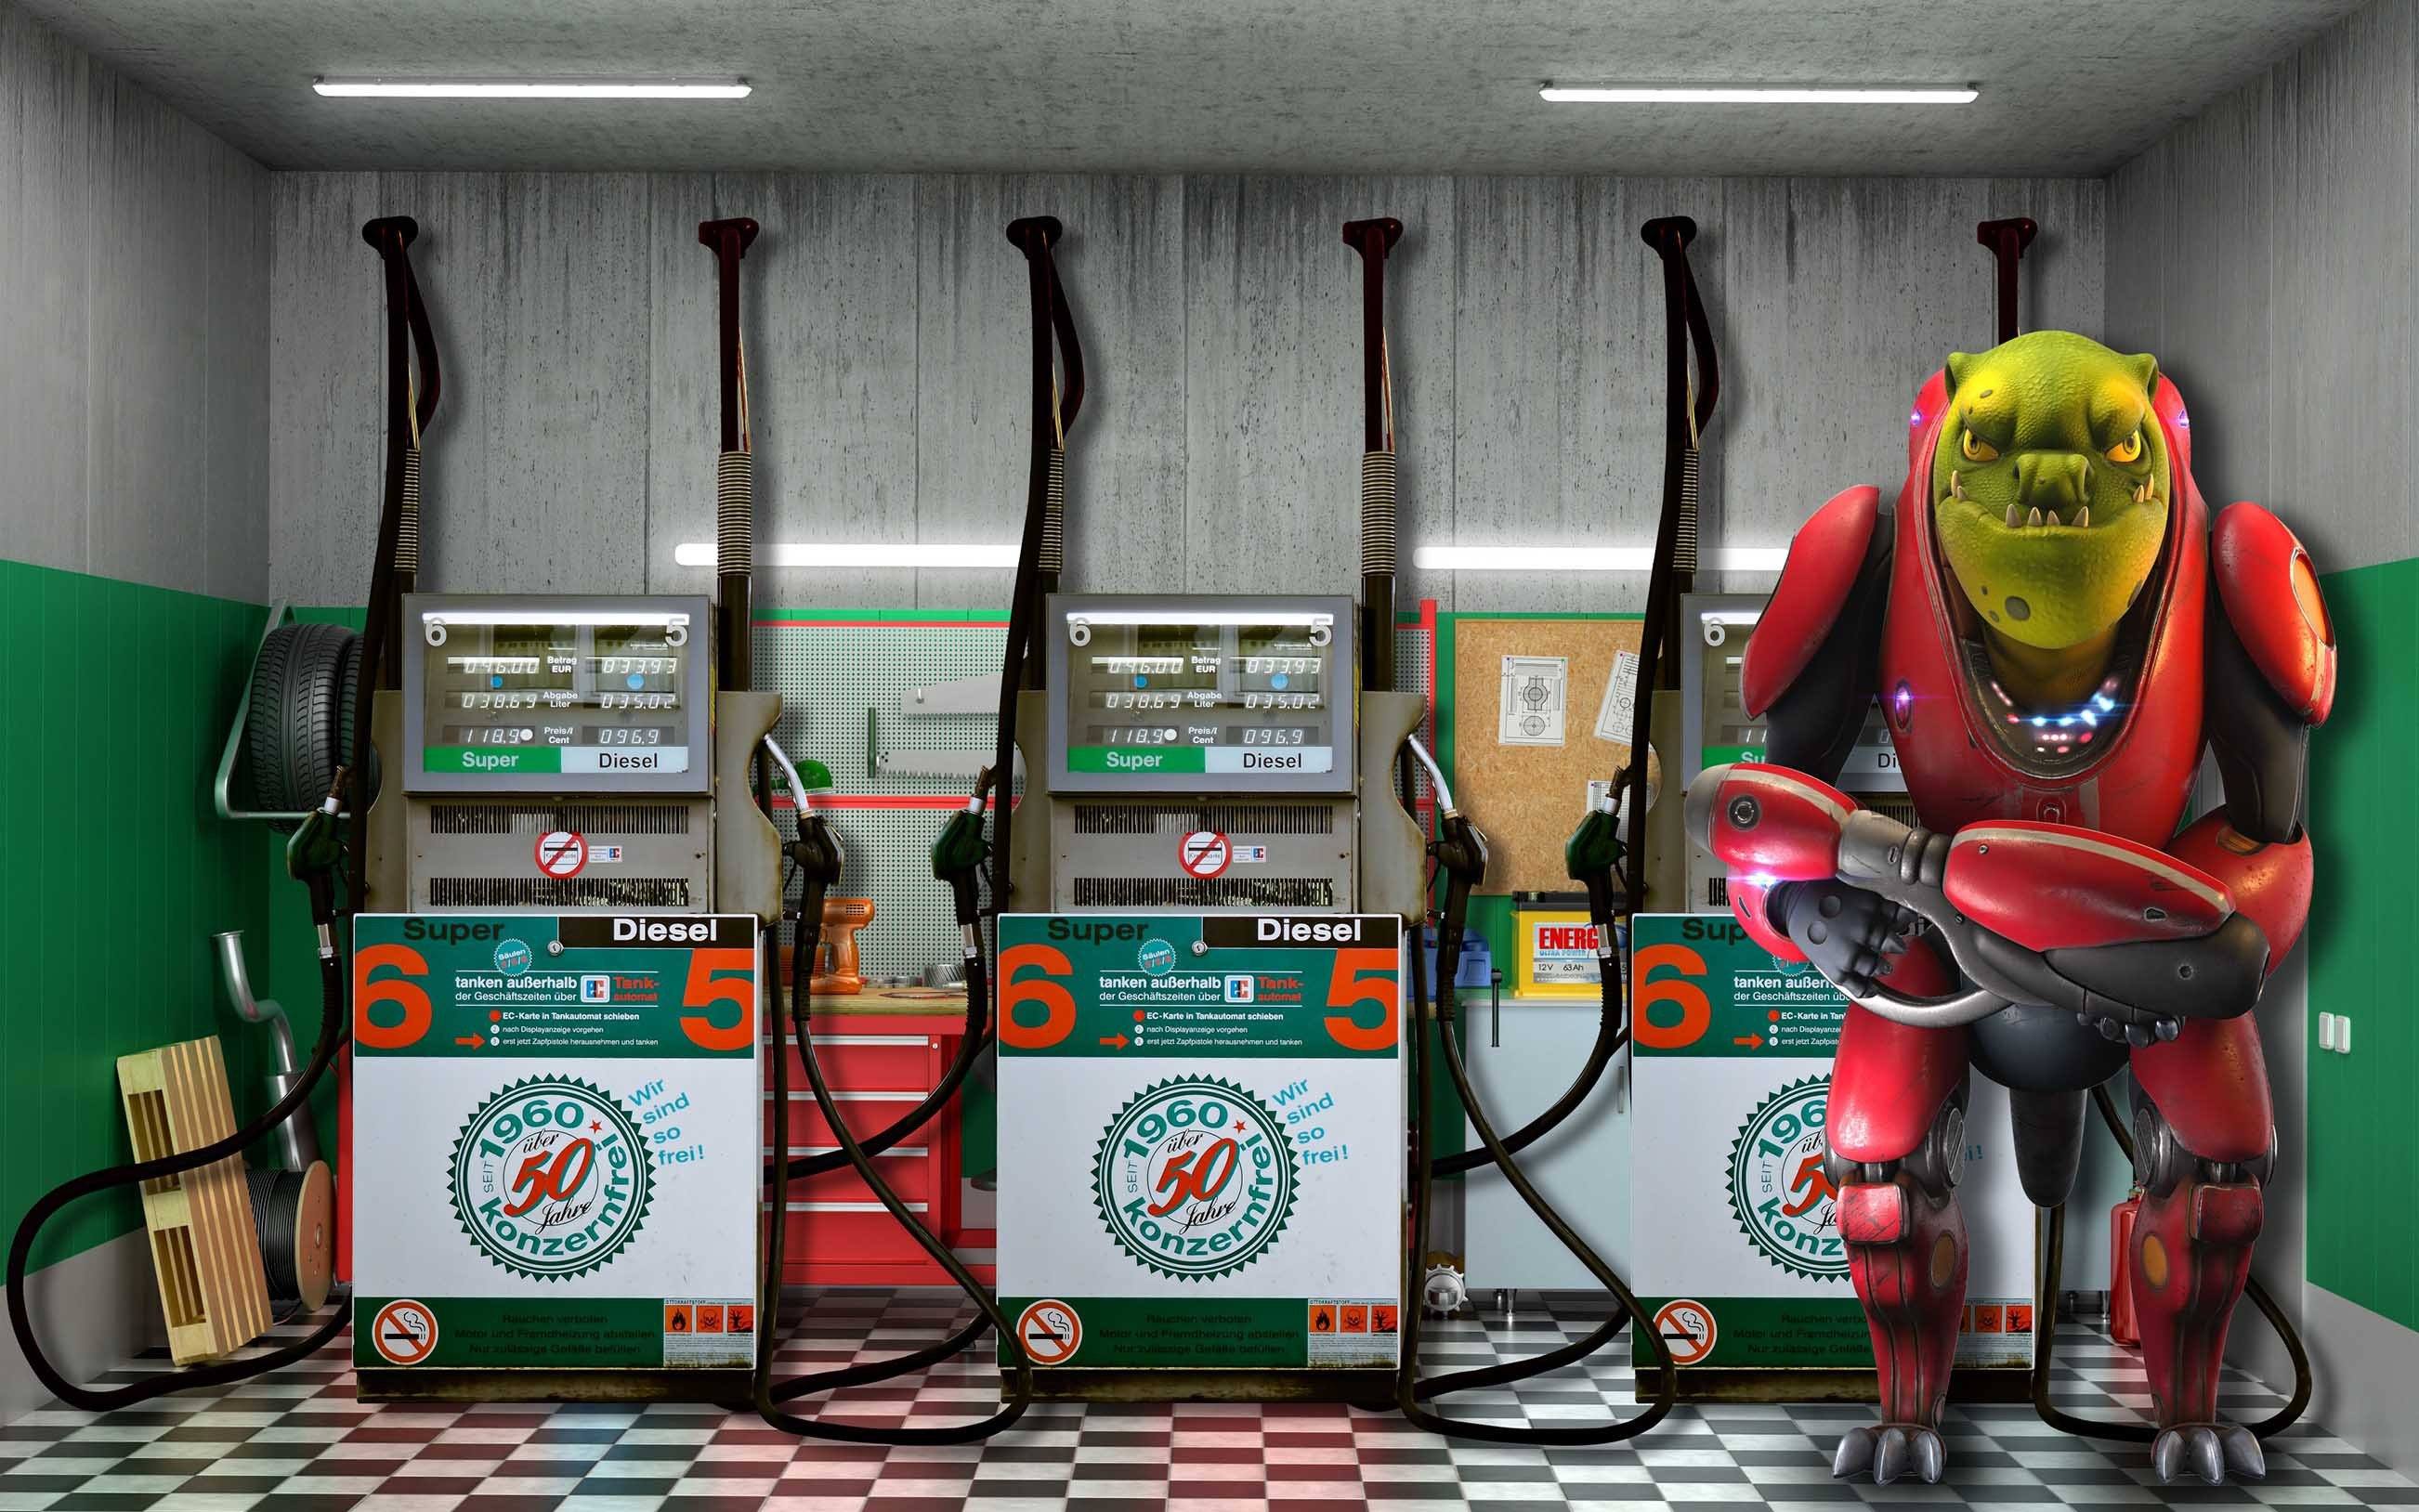 3D Gas Station Robot 401 Garage Door Mural Wallpaper AJ Wallpaper 